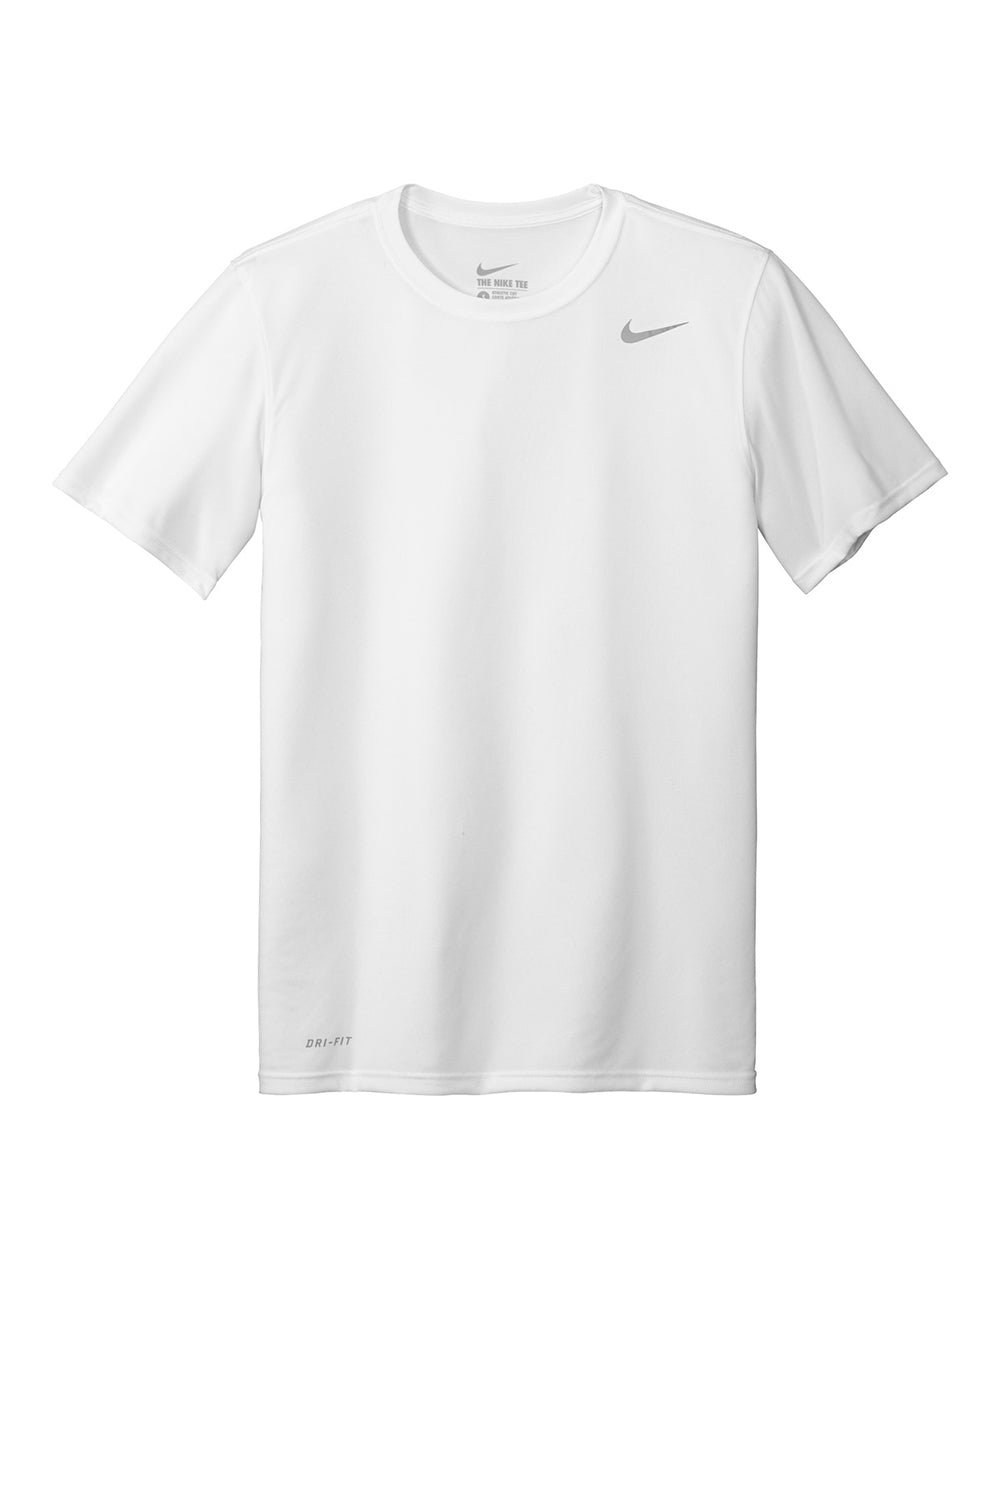 Nike 727982 Mens Legend Dri-Fit Moisture Wicking Short Sleeve Crewneck T-Shirt White Flat Front